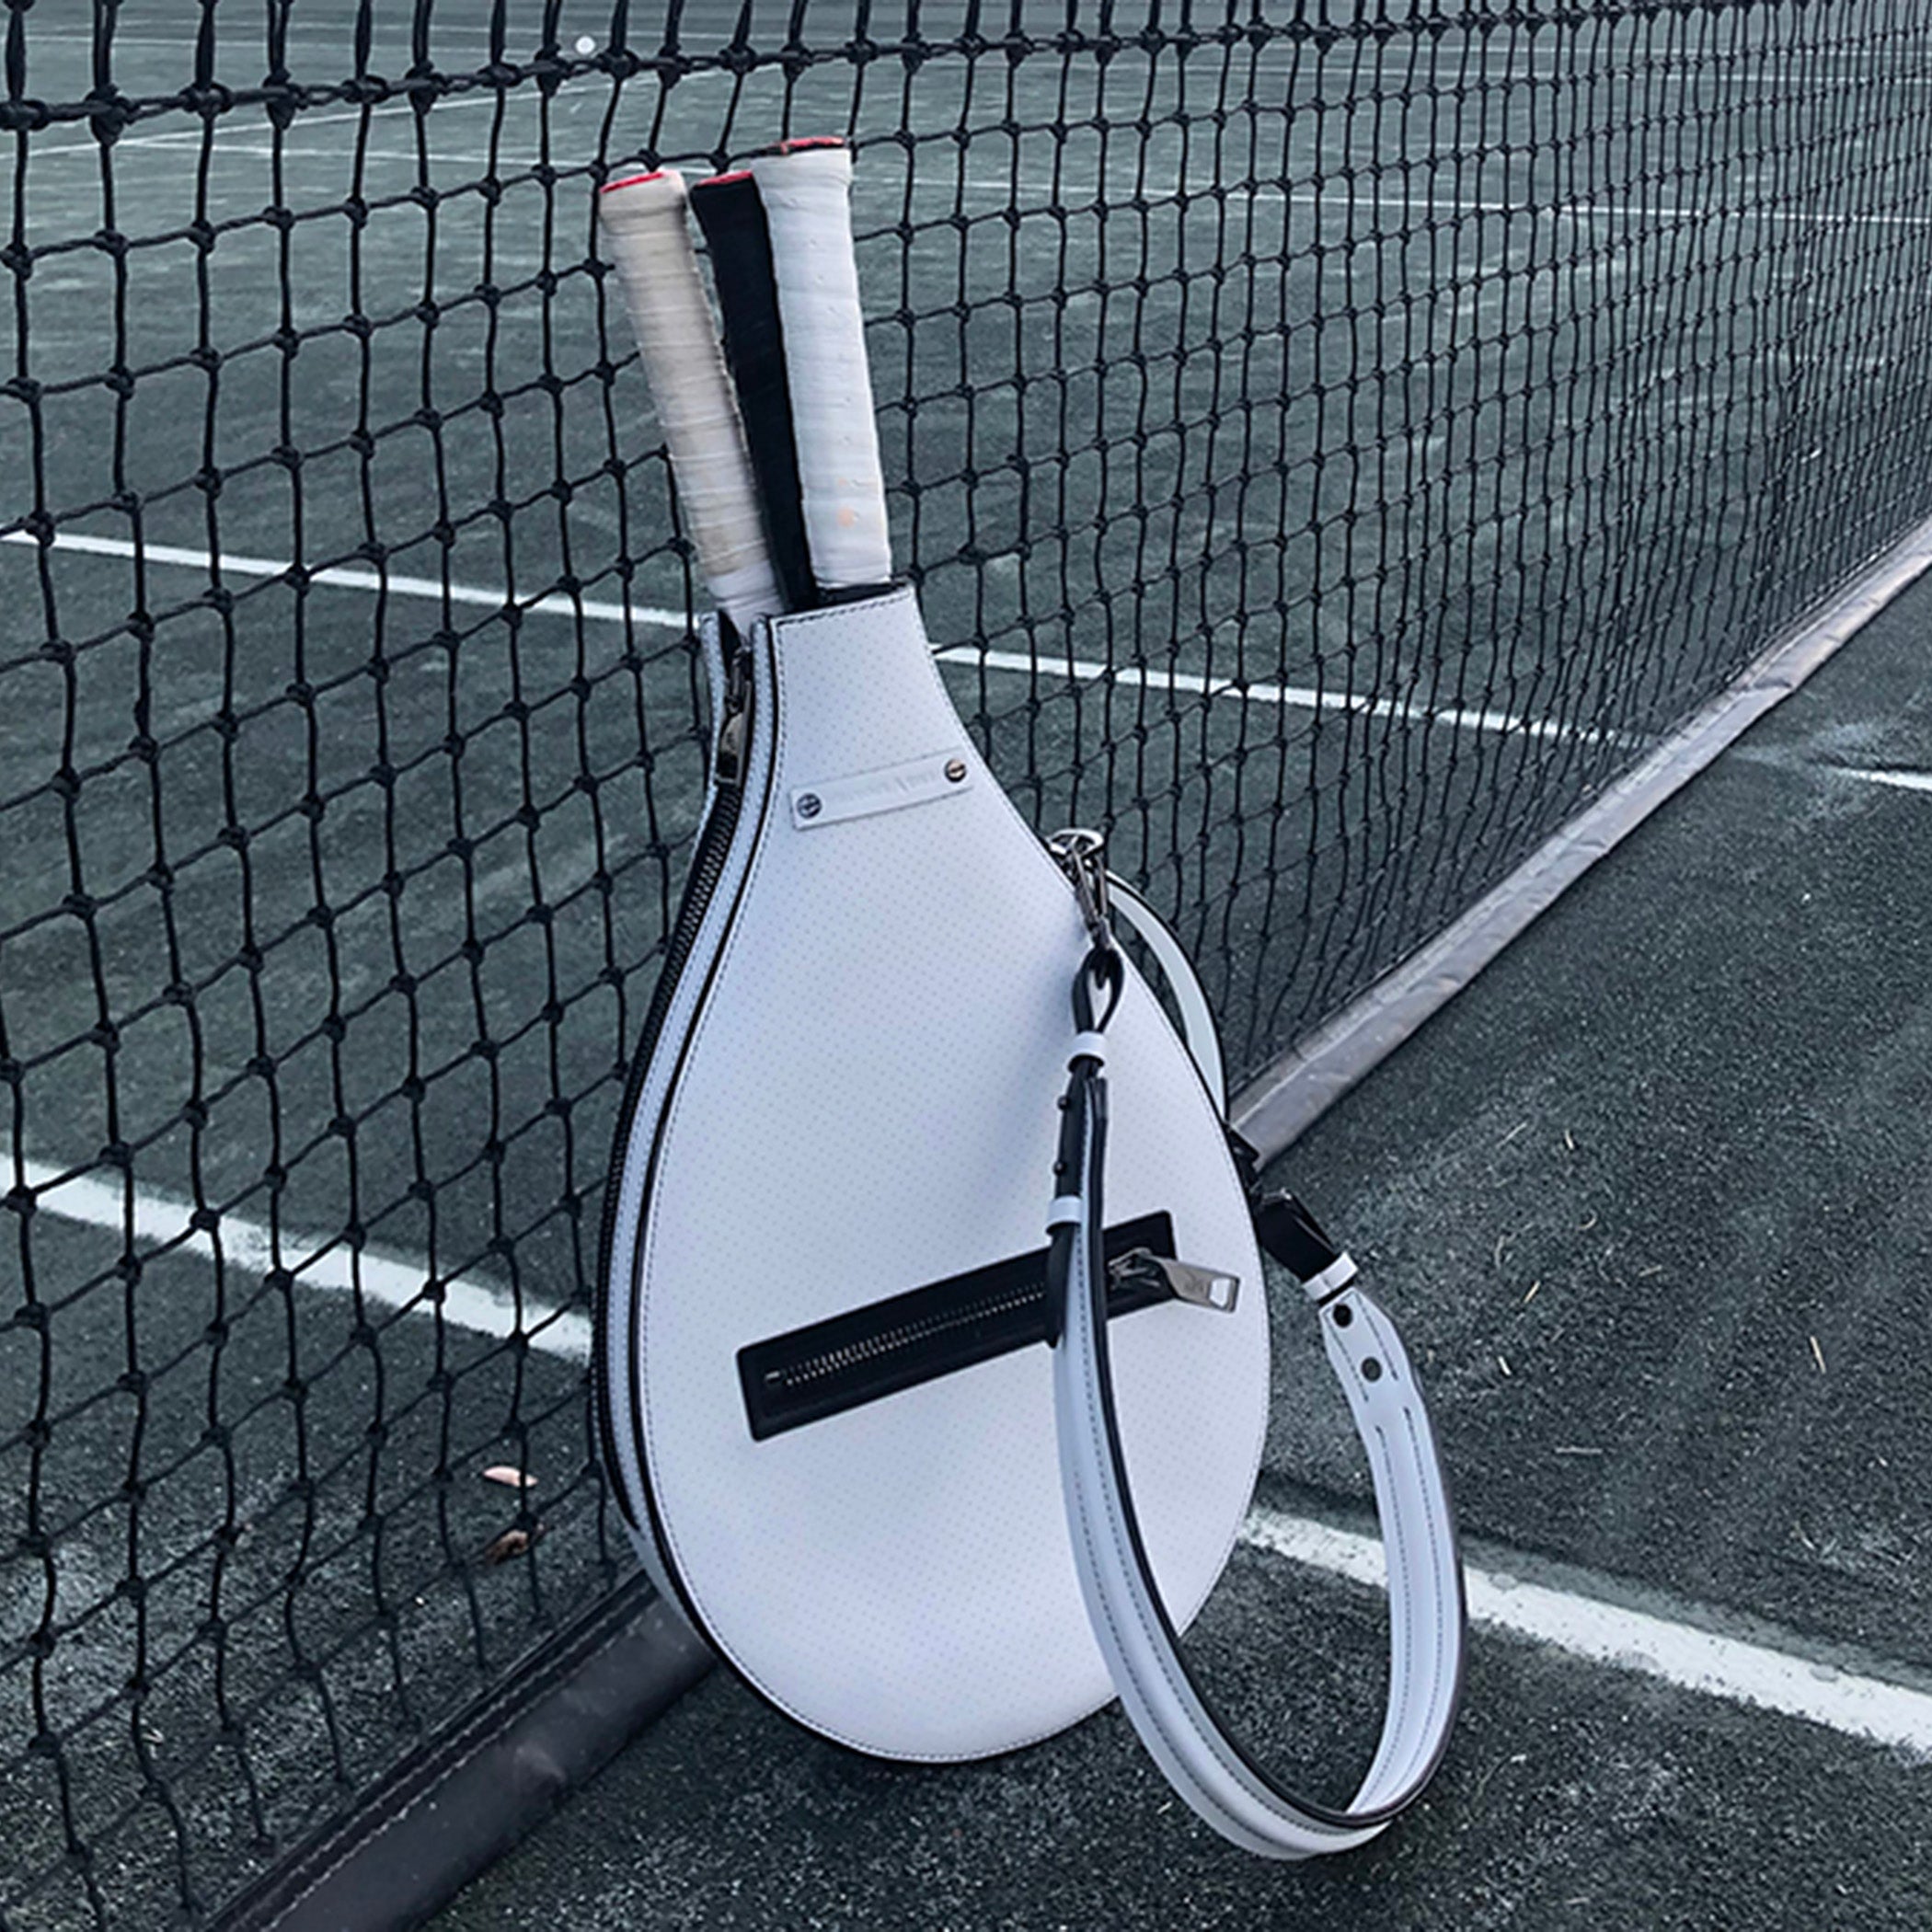 Billie Bag Leather Tennis Racket Bag (White/Black/Gunmetal)